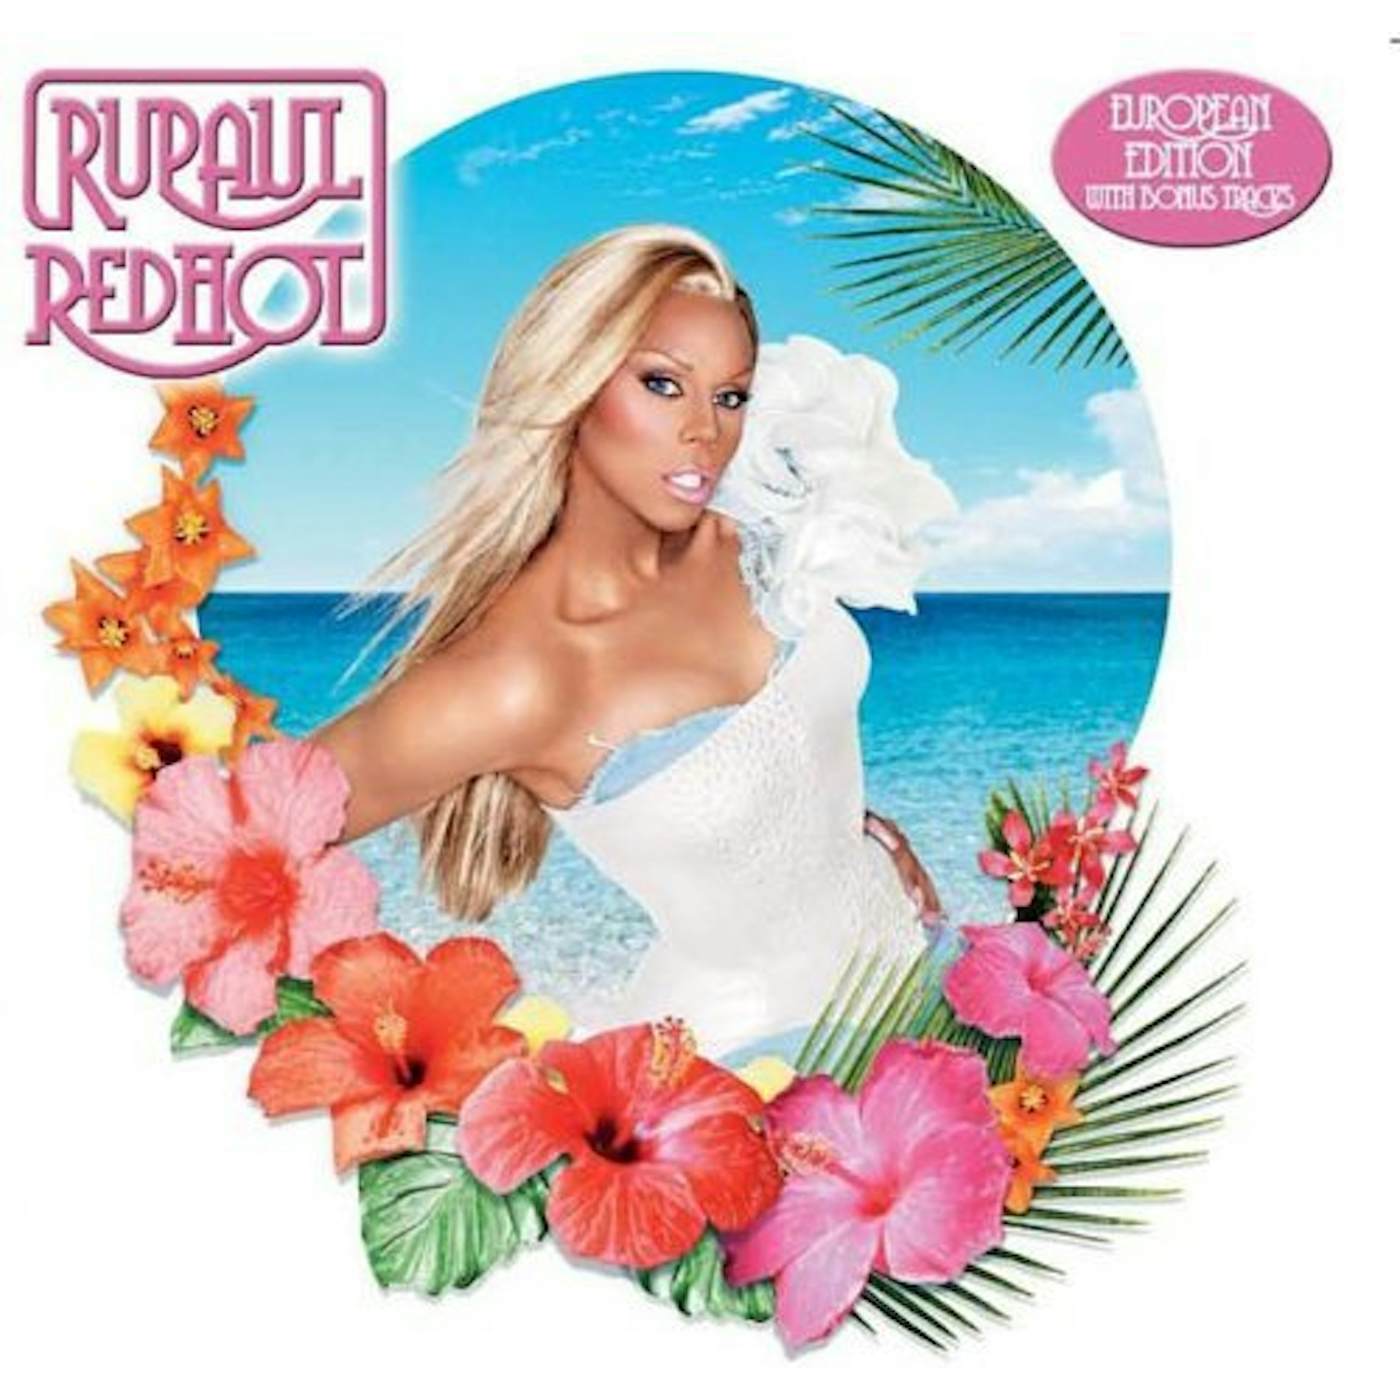 RuPaul RED HOT (EUROPEAN EDITION) CD